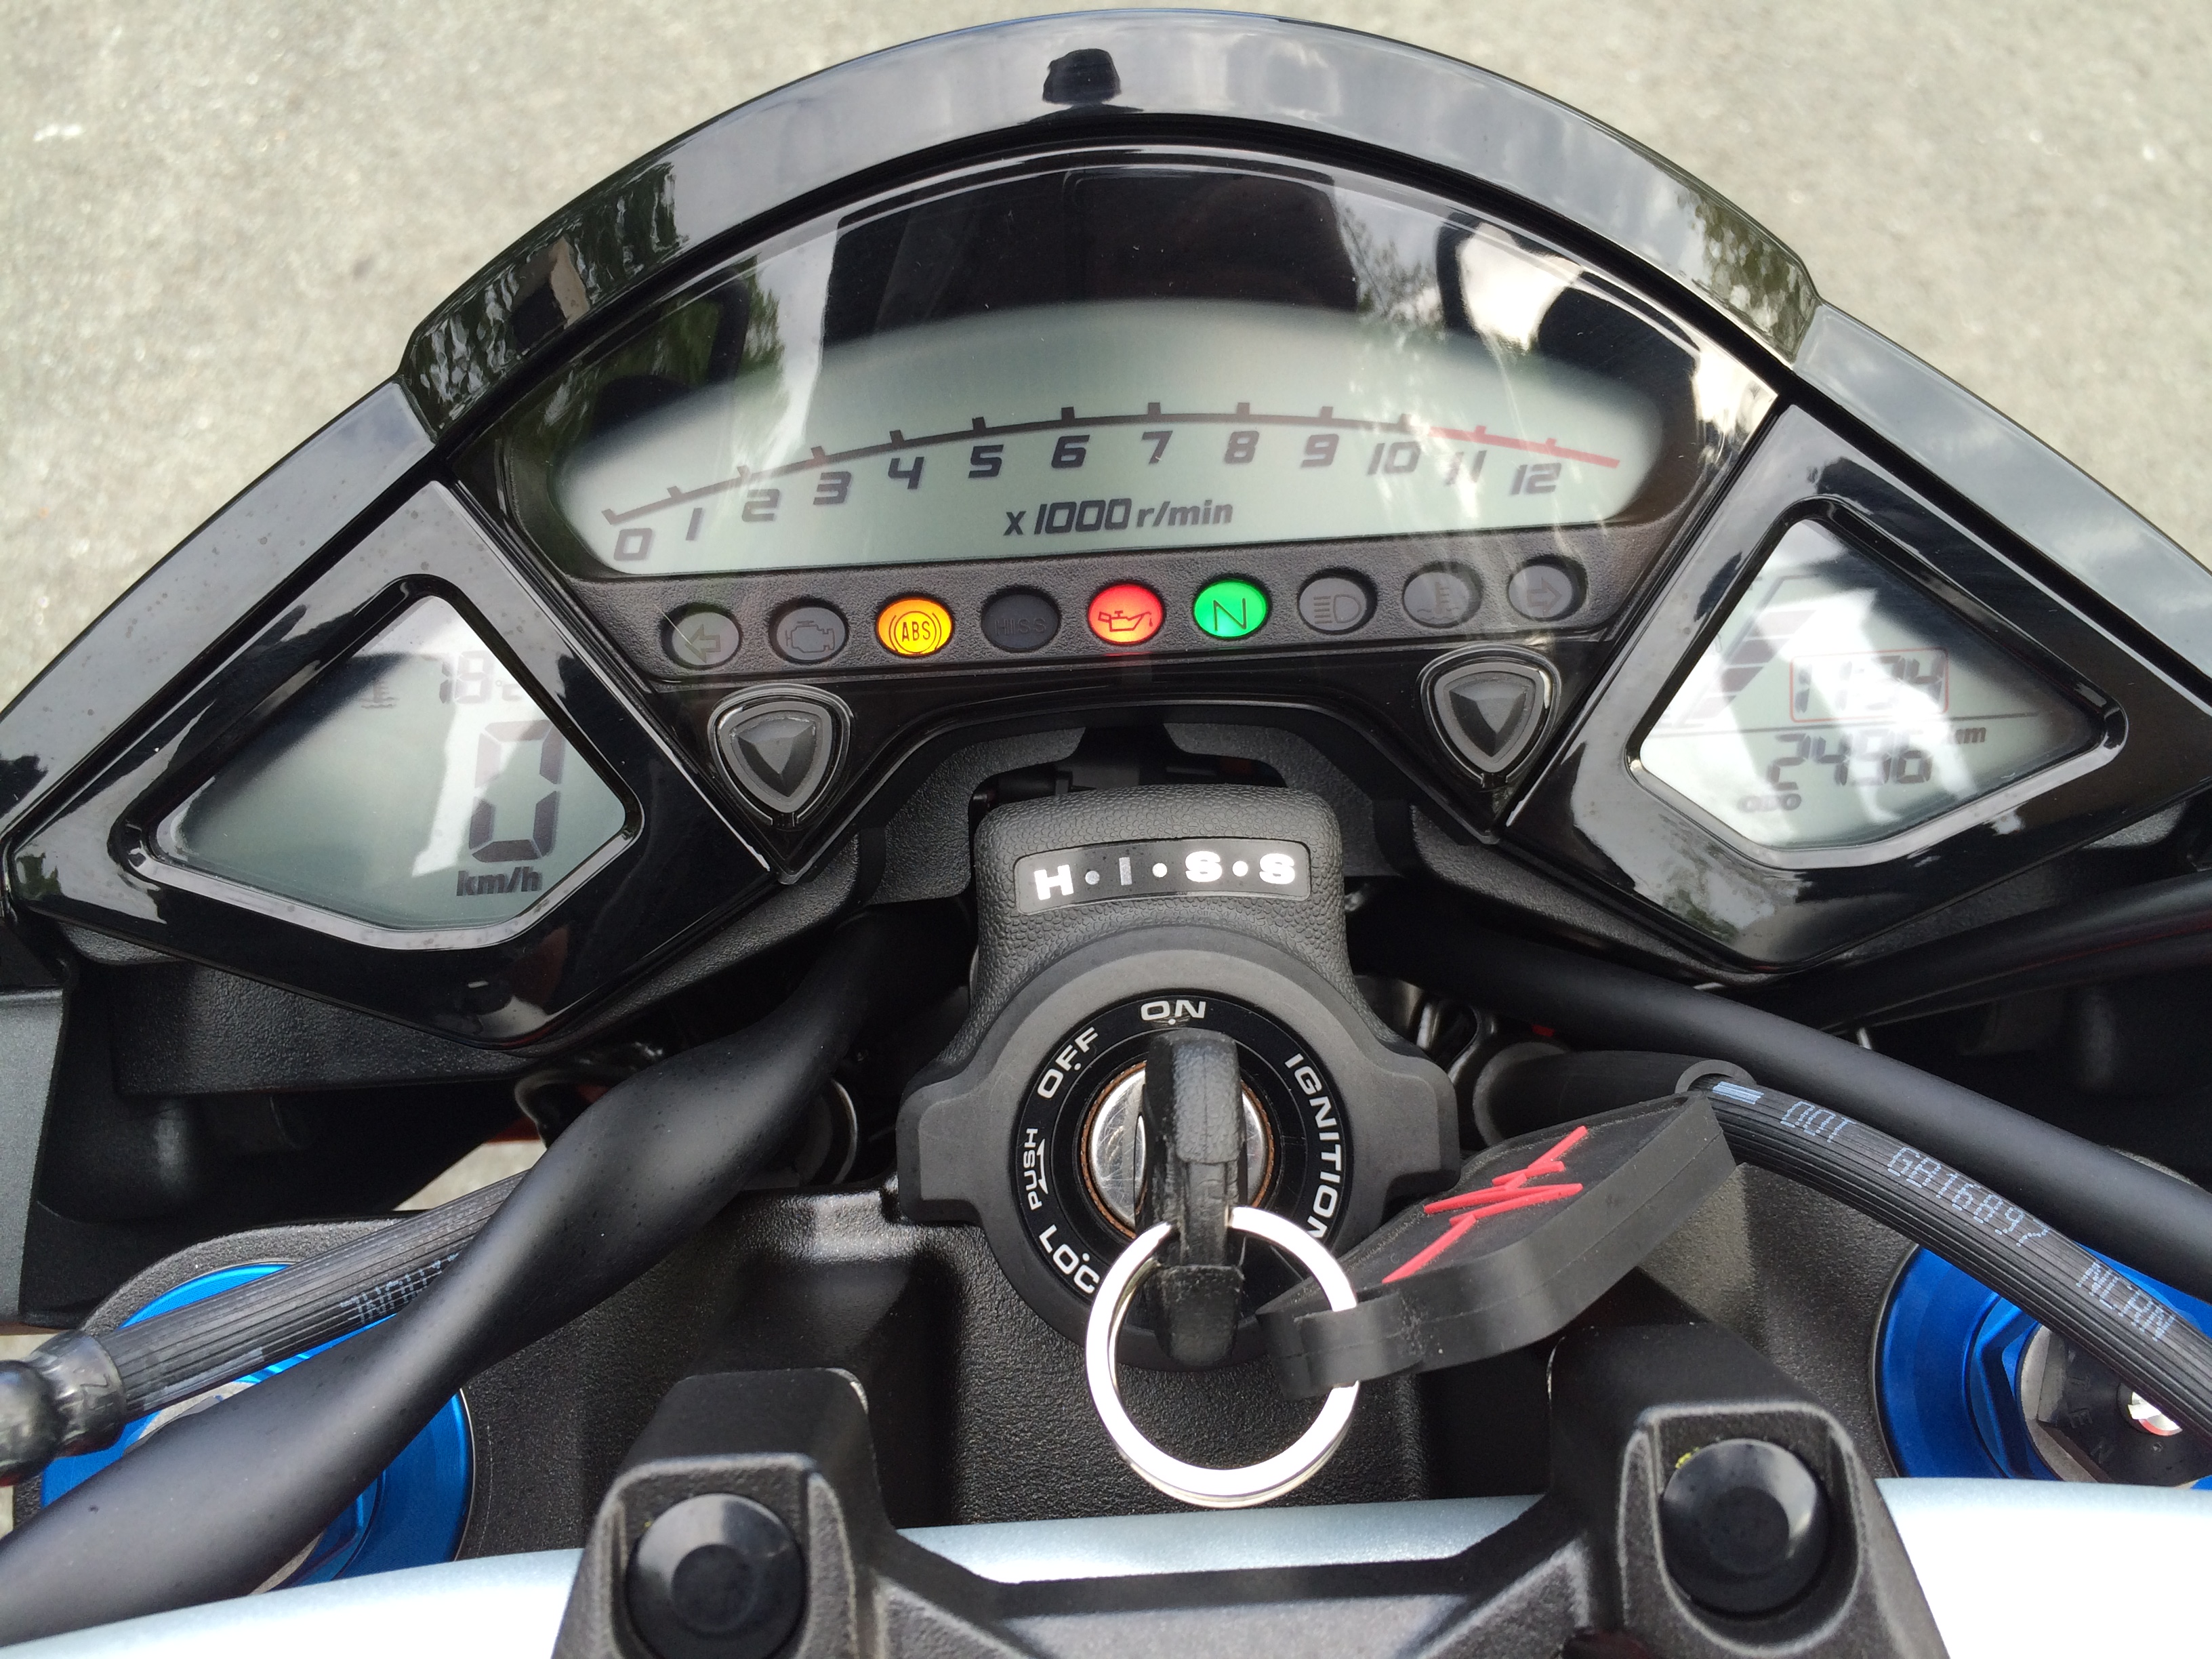 © Motards-IDF - Test Honda CB1000R - 08 - Bloc compteur